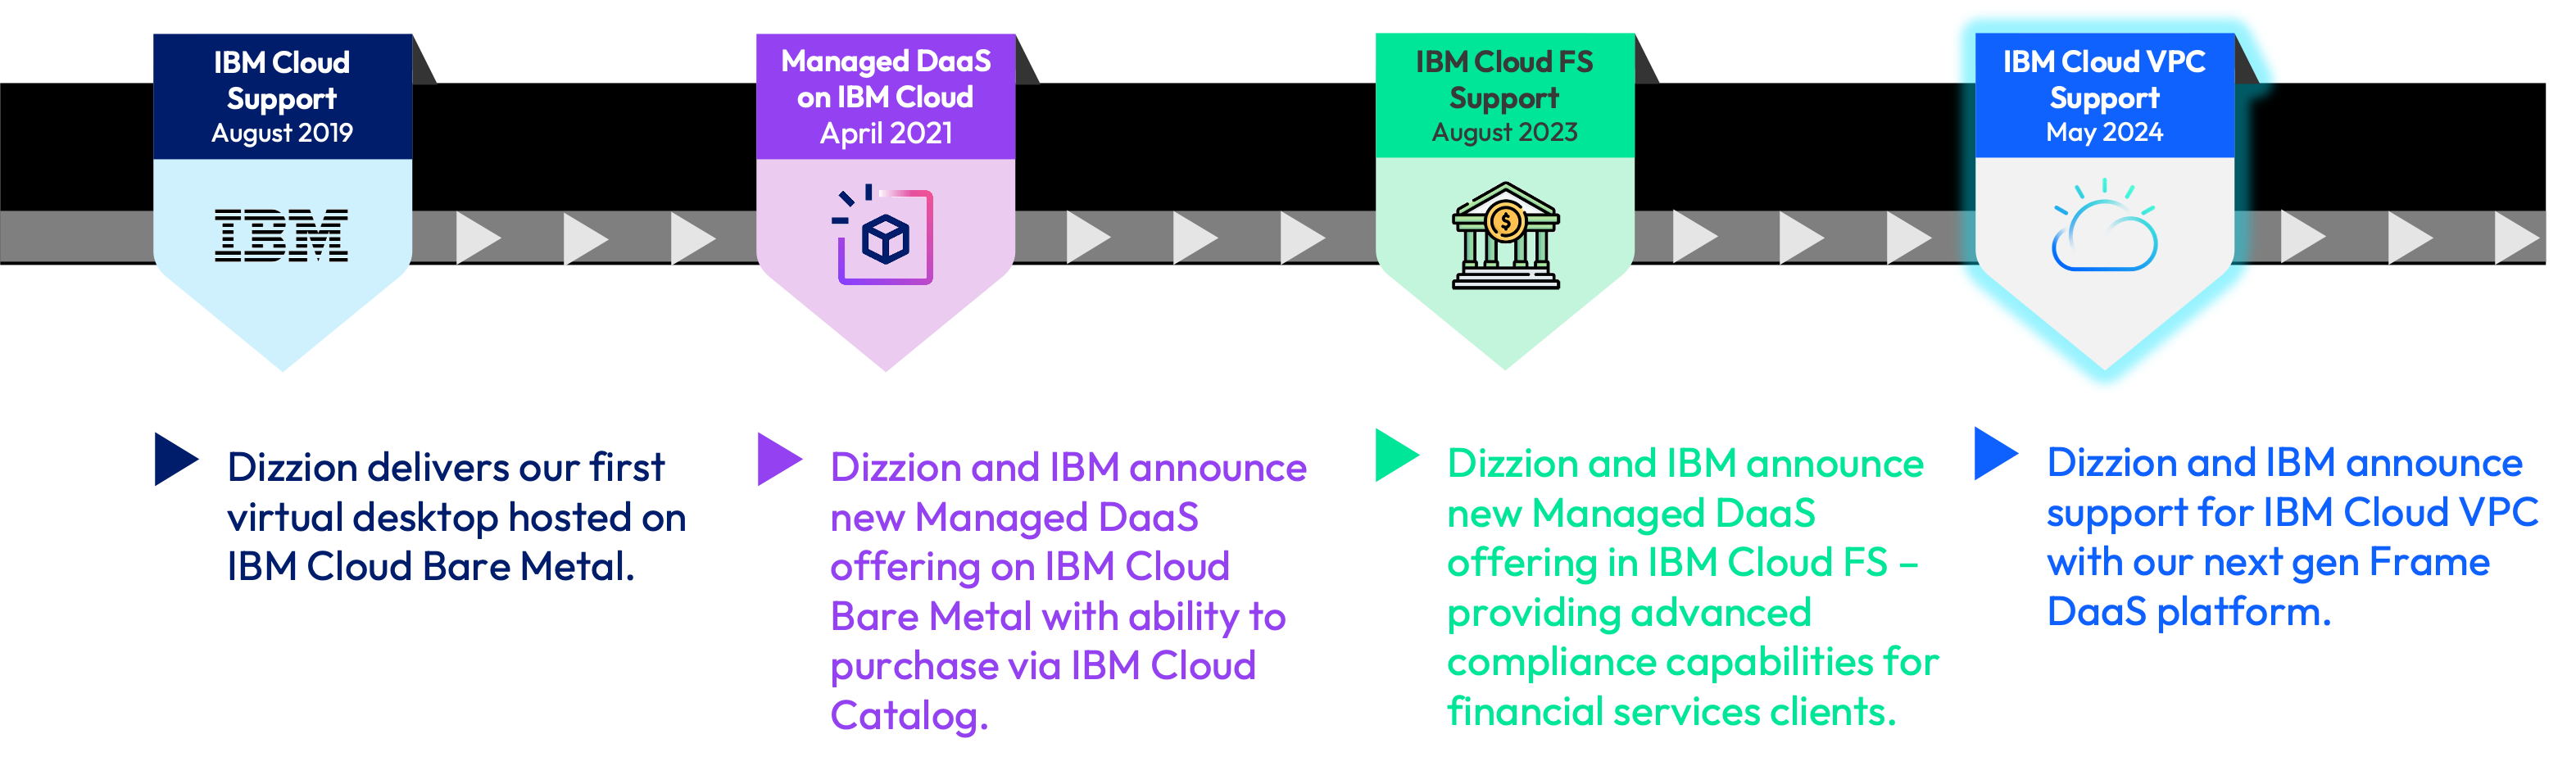 Dizzion and IBM Partnership Timeline